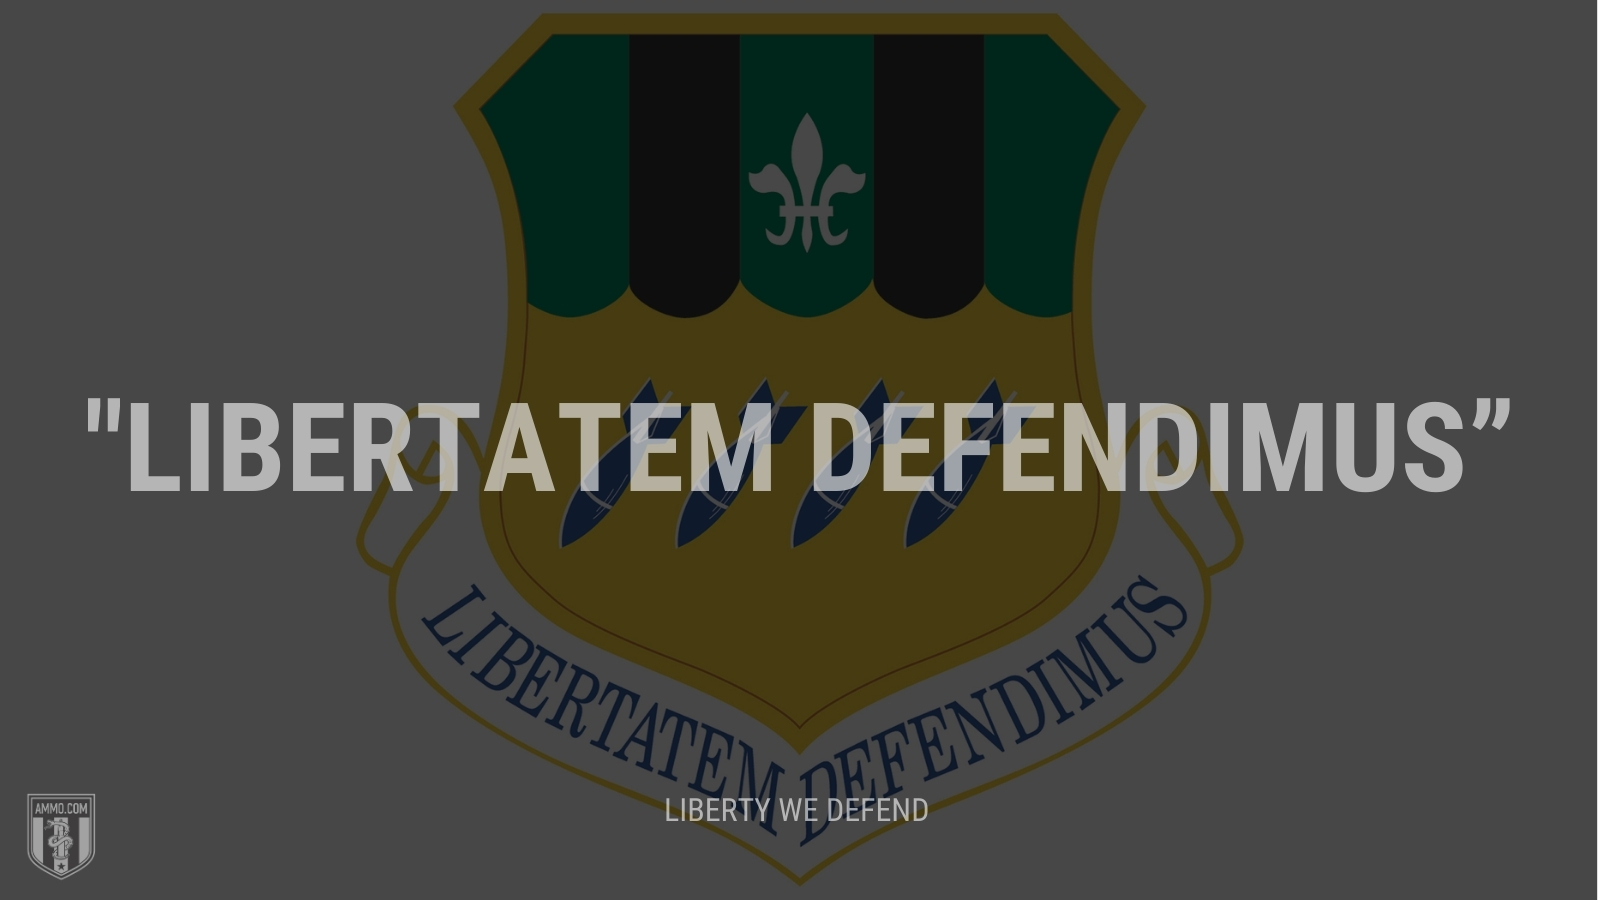 “Libertatem defendimus” - Liberty we defend